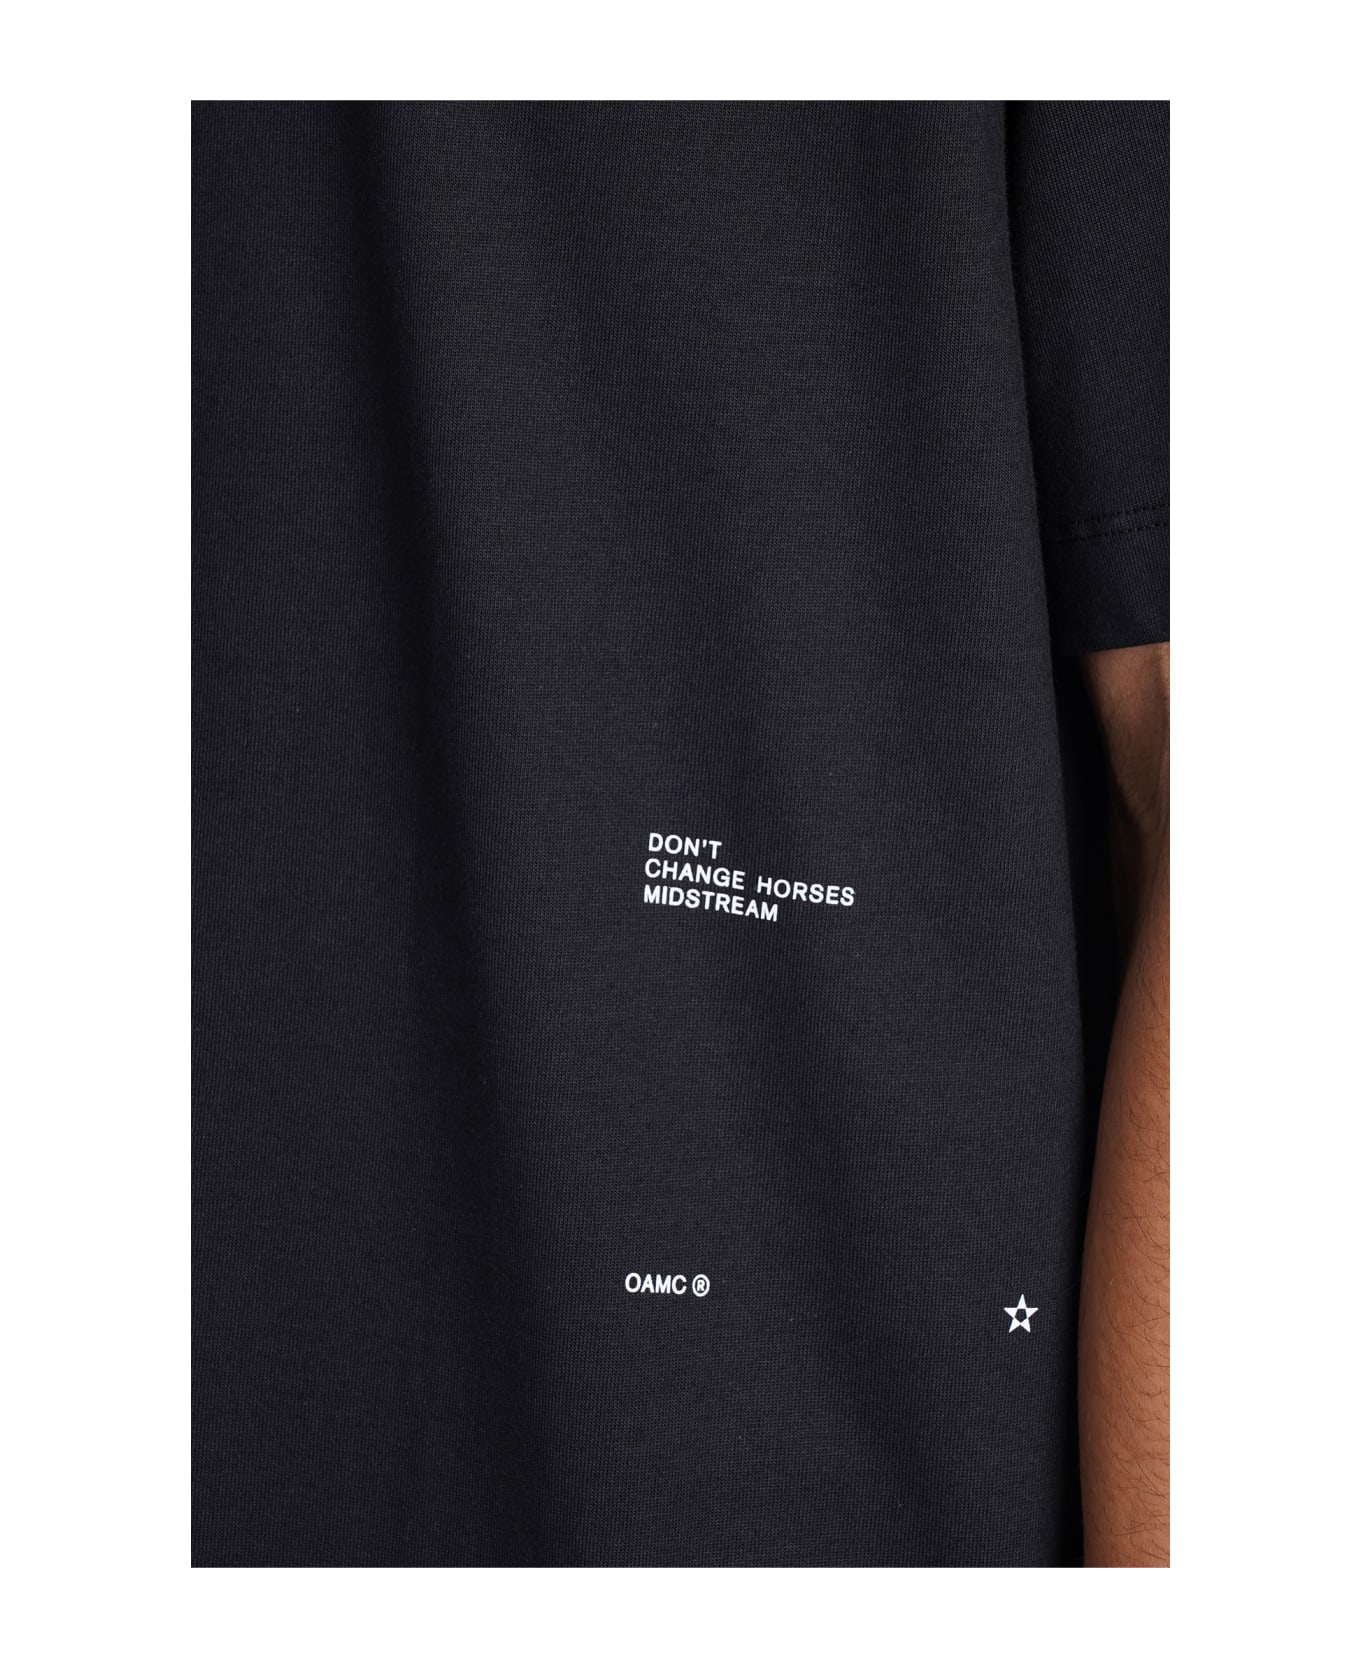 OAMC T-shirt In Black Cotton - black シャツ